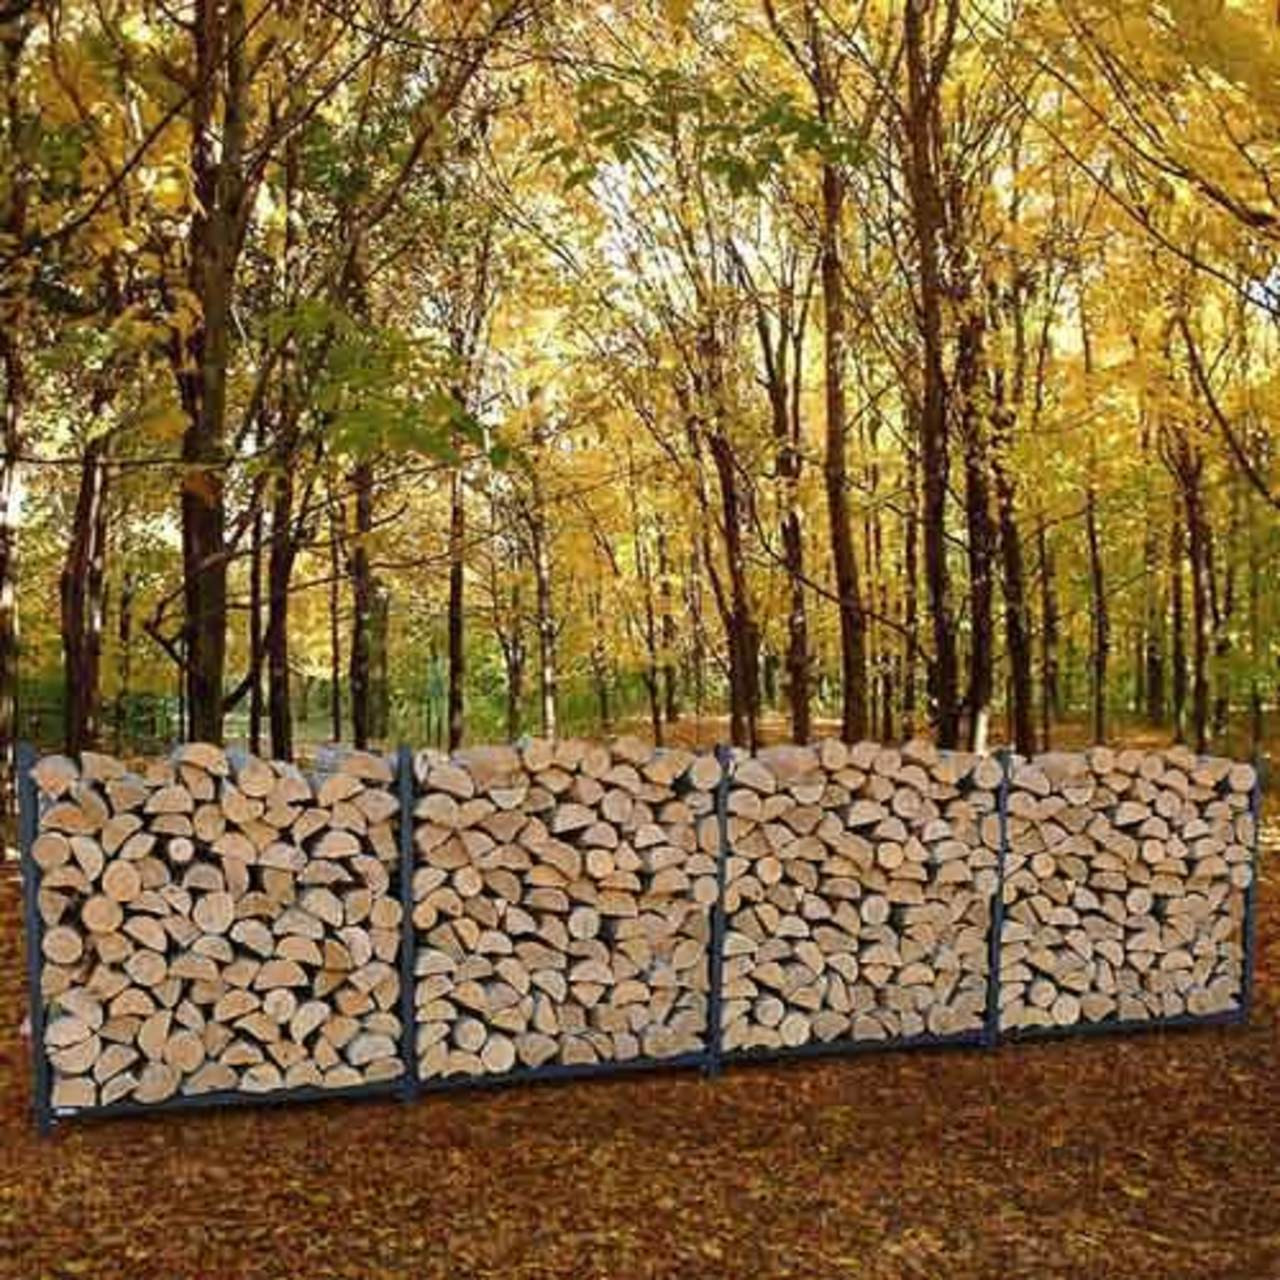 Costway 2 Feet Outdoor Heavy Duty Steel Firewood Log Rack Wood